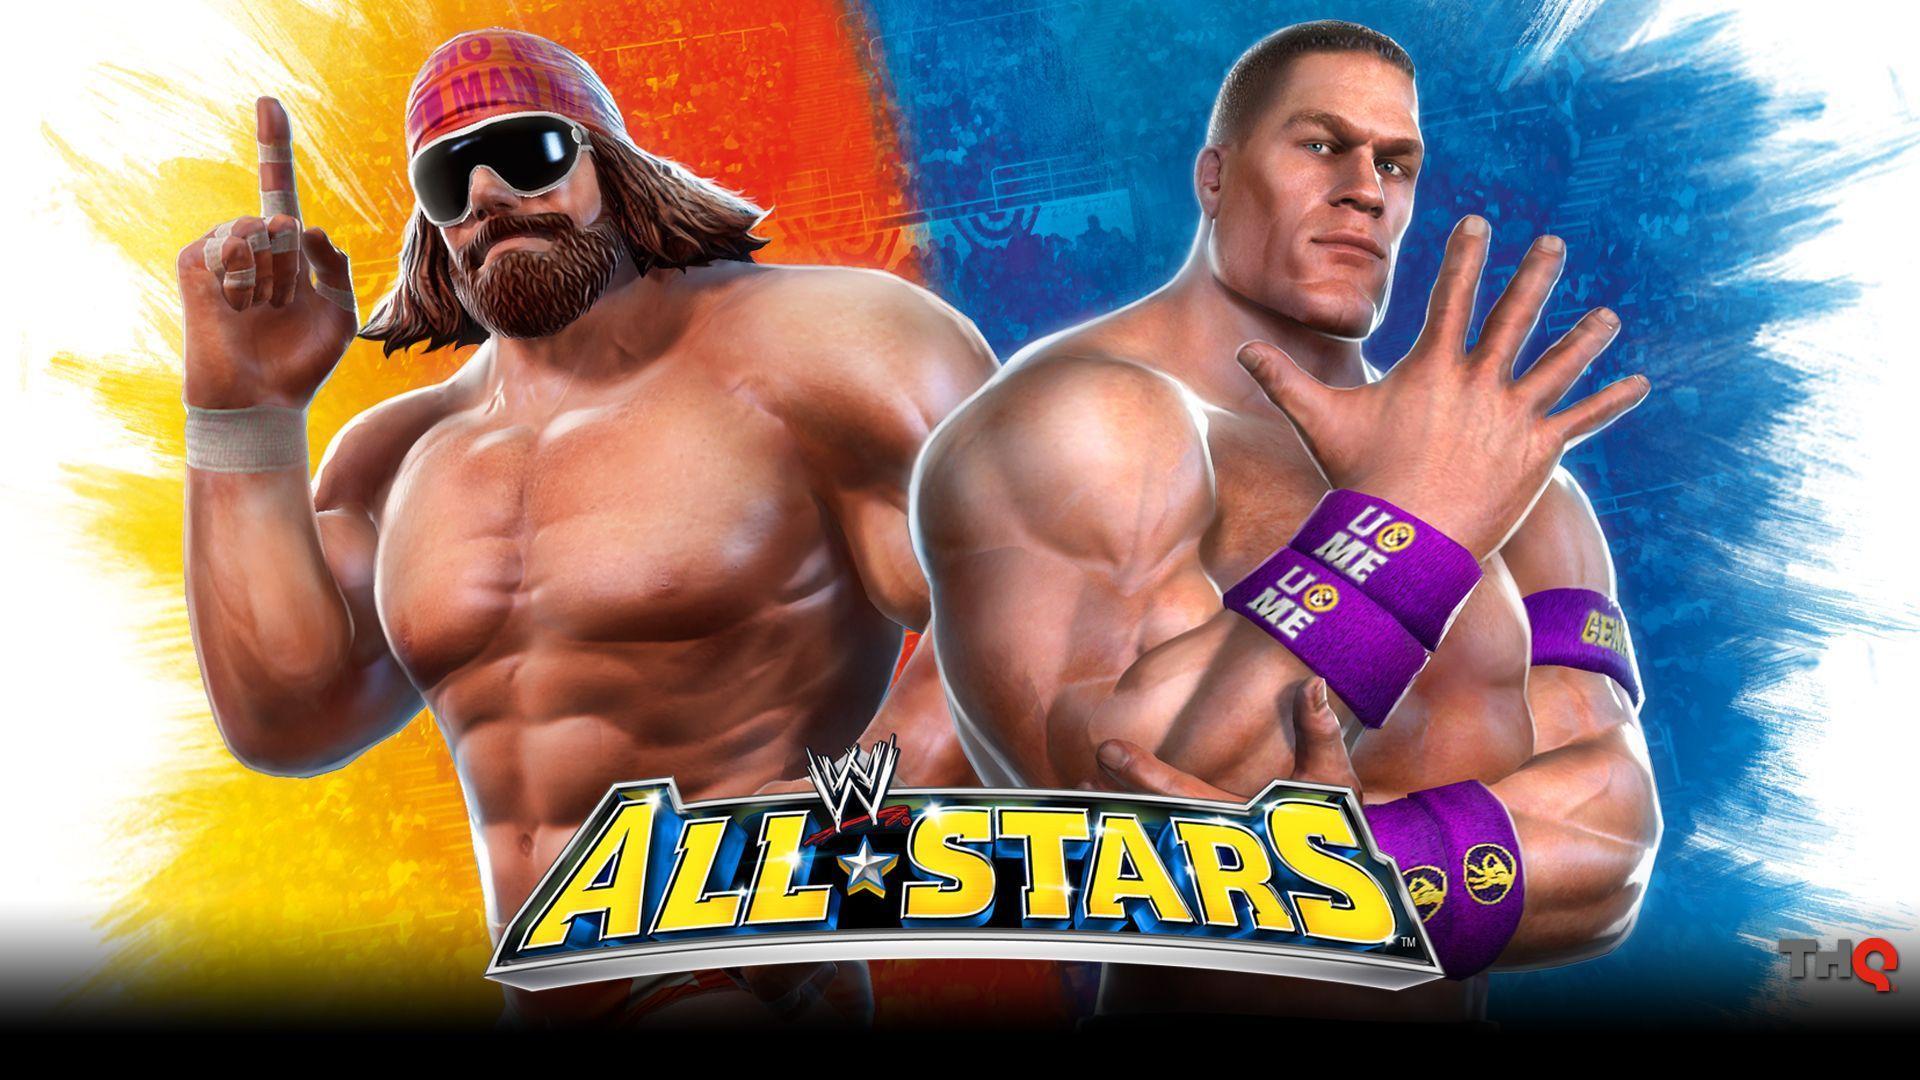 WWE All Stars Wallpaper. Pro Wrestling